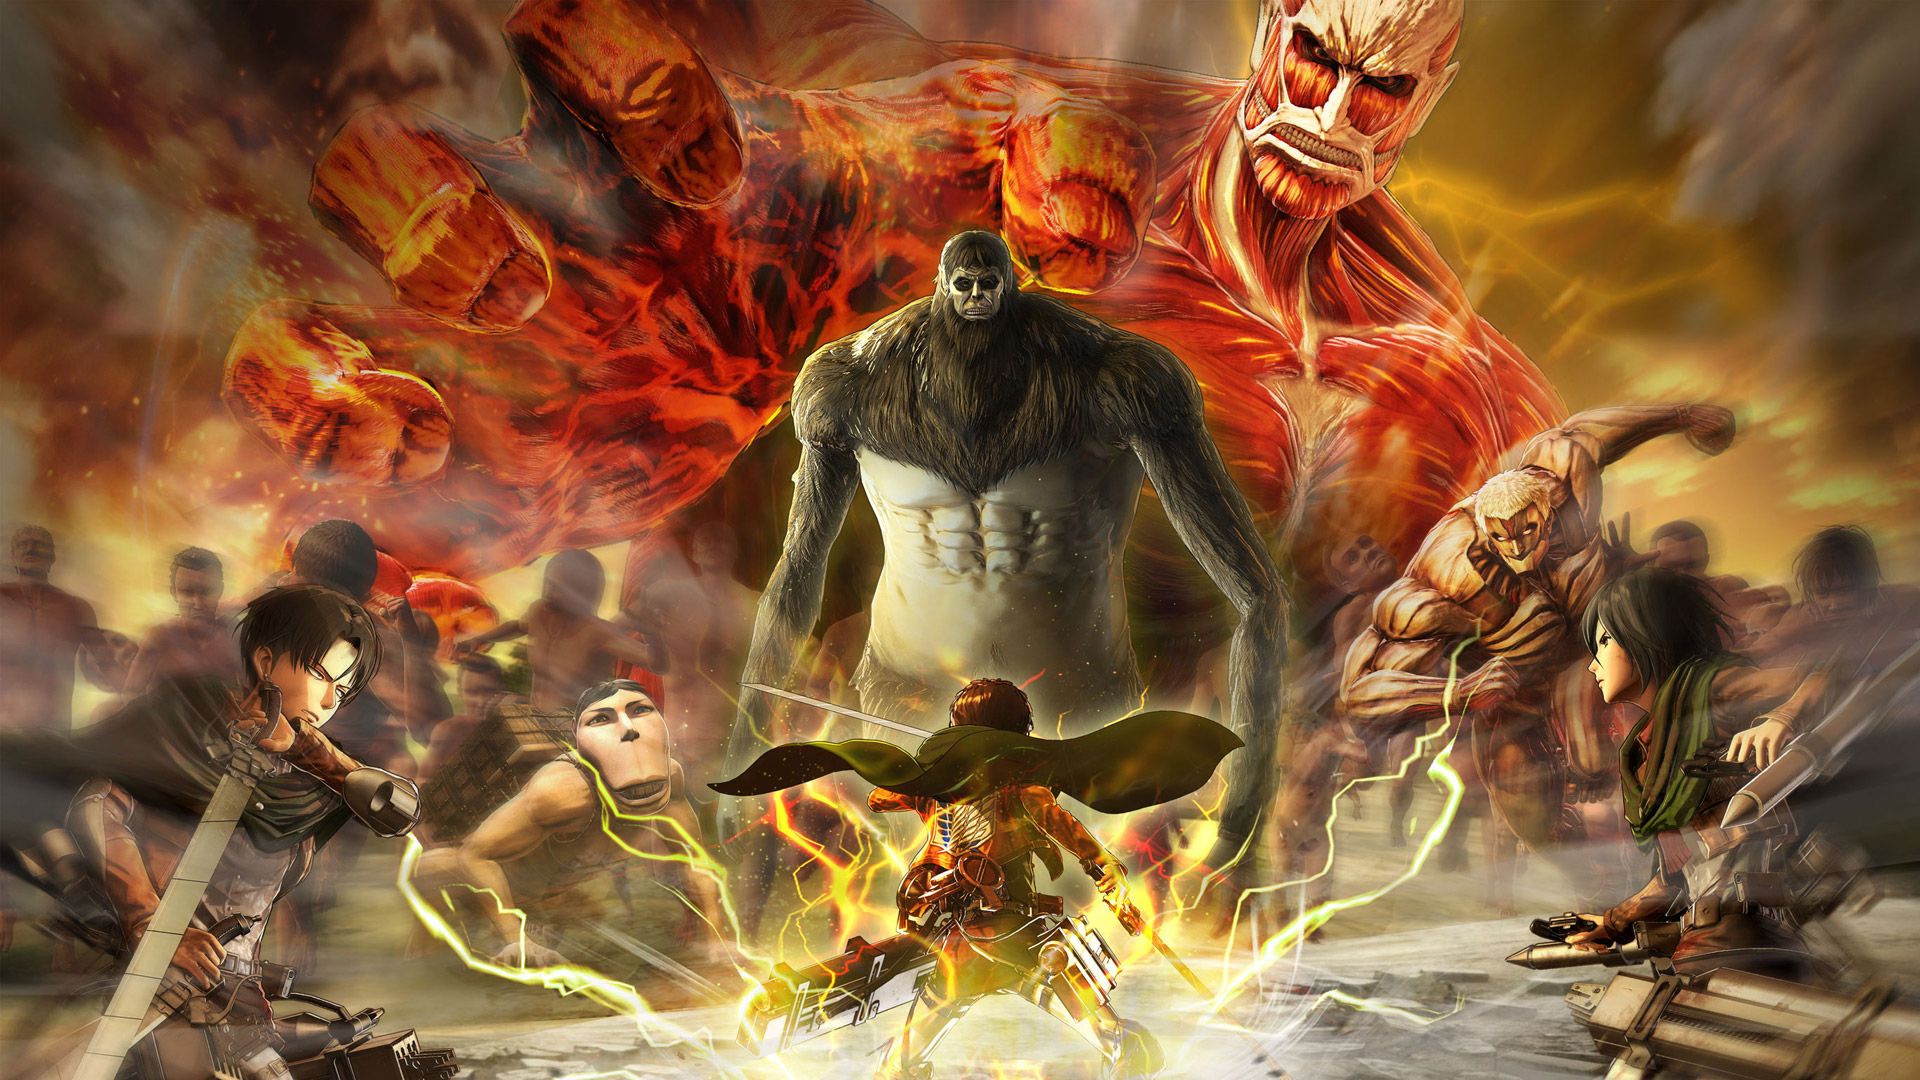 Free Attack On Titan 2 Wallpaper In On Titan 2 Final Battle Game